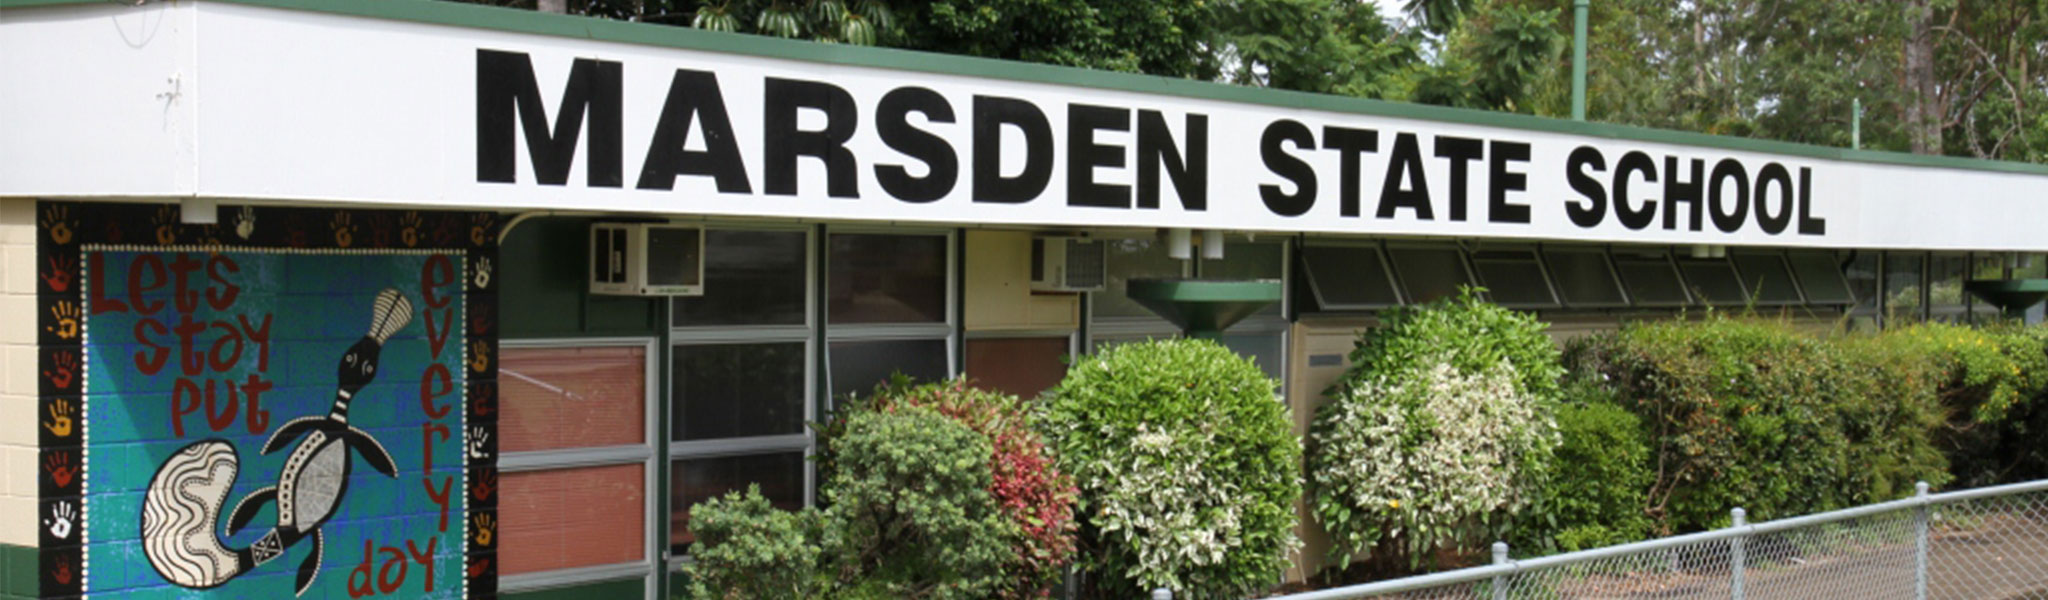 Marsden State School sign